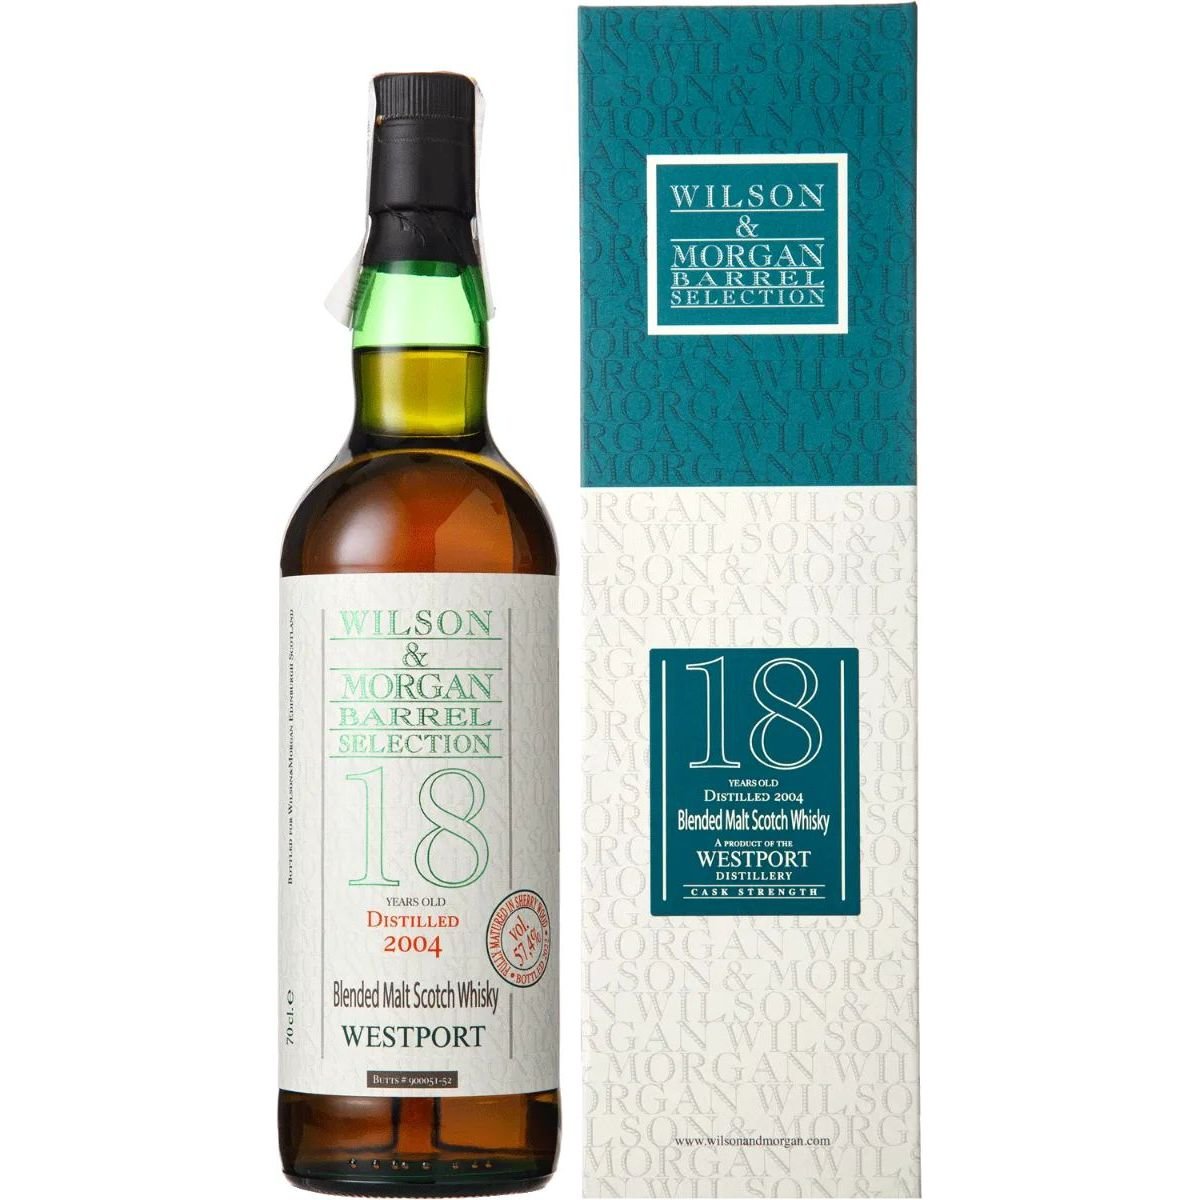 Віскі Wilson & Morgan Westport 18 yo Blended Malt Scotch Whisky 57.4% 0.7 л у подарунковій упаковці - фото 1